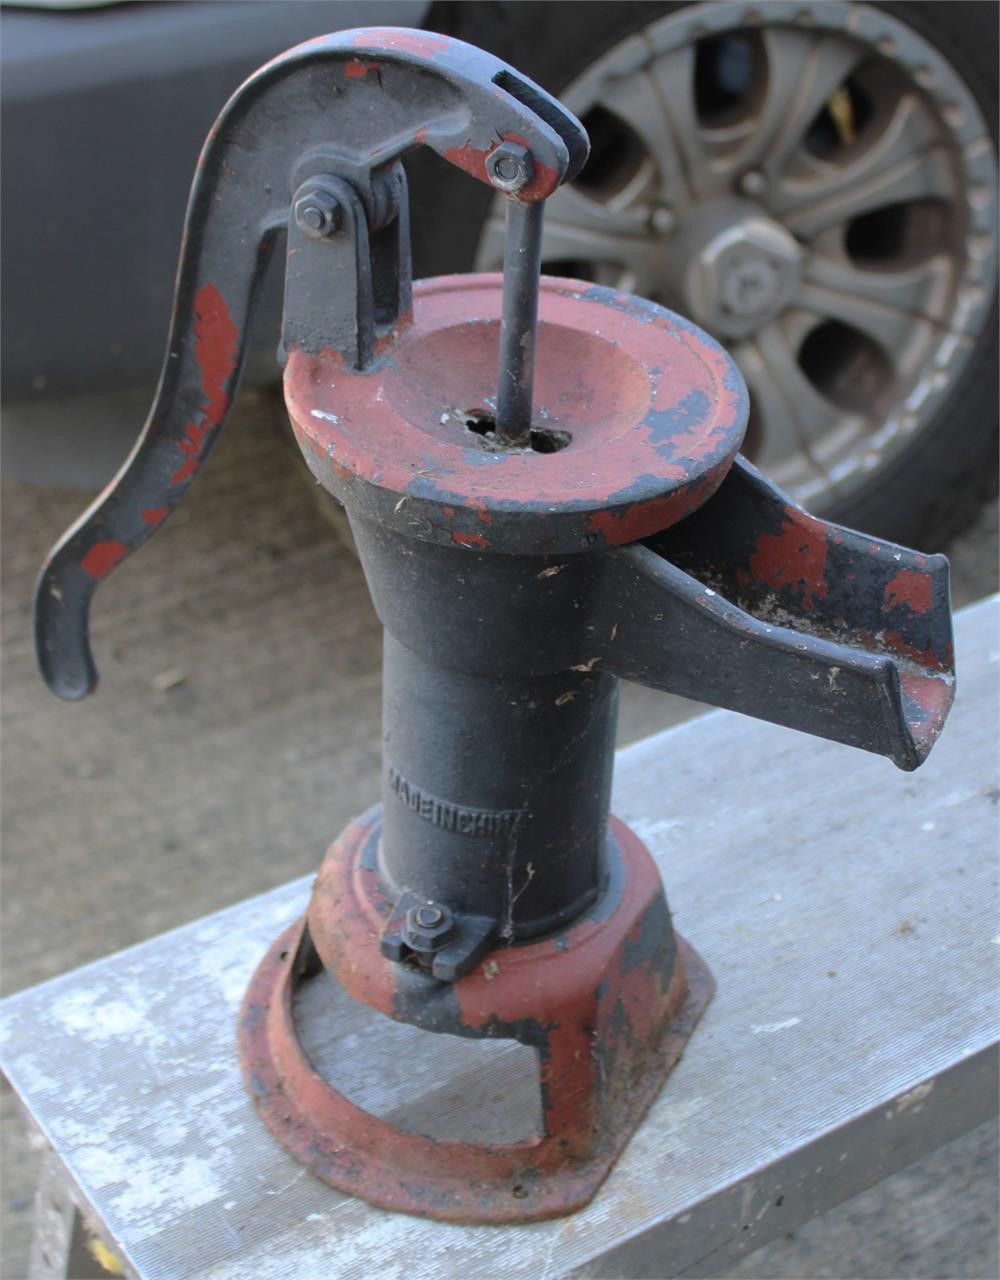 Cast Vintage Well Pump 18" Tall